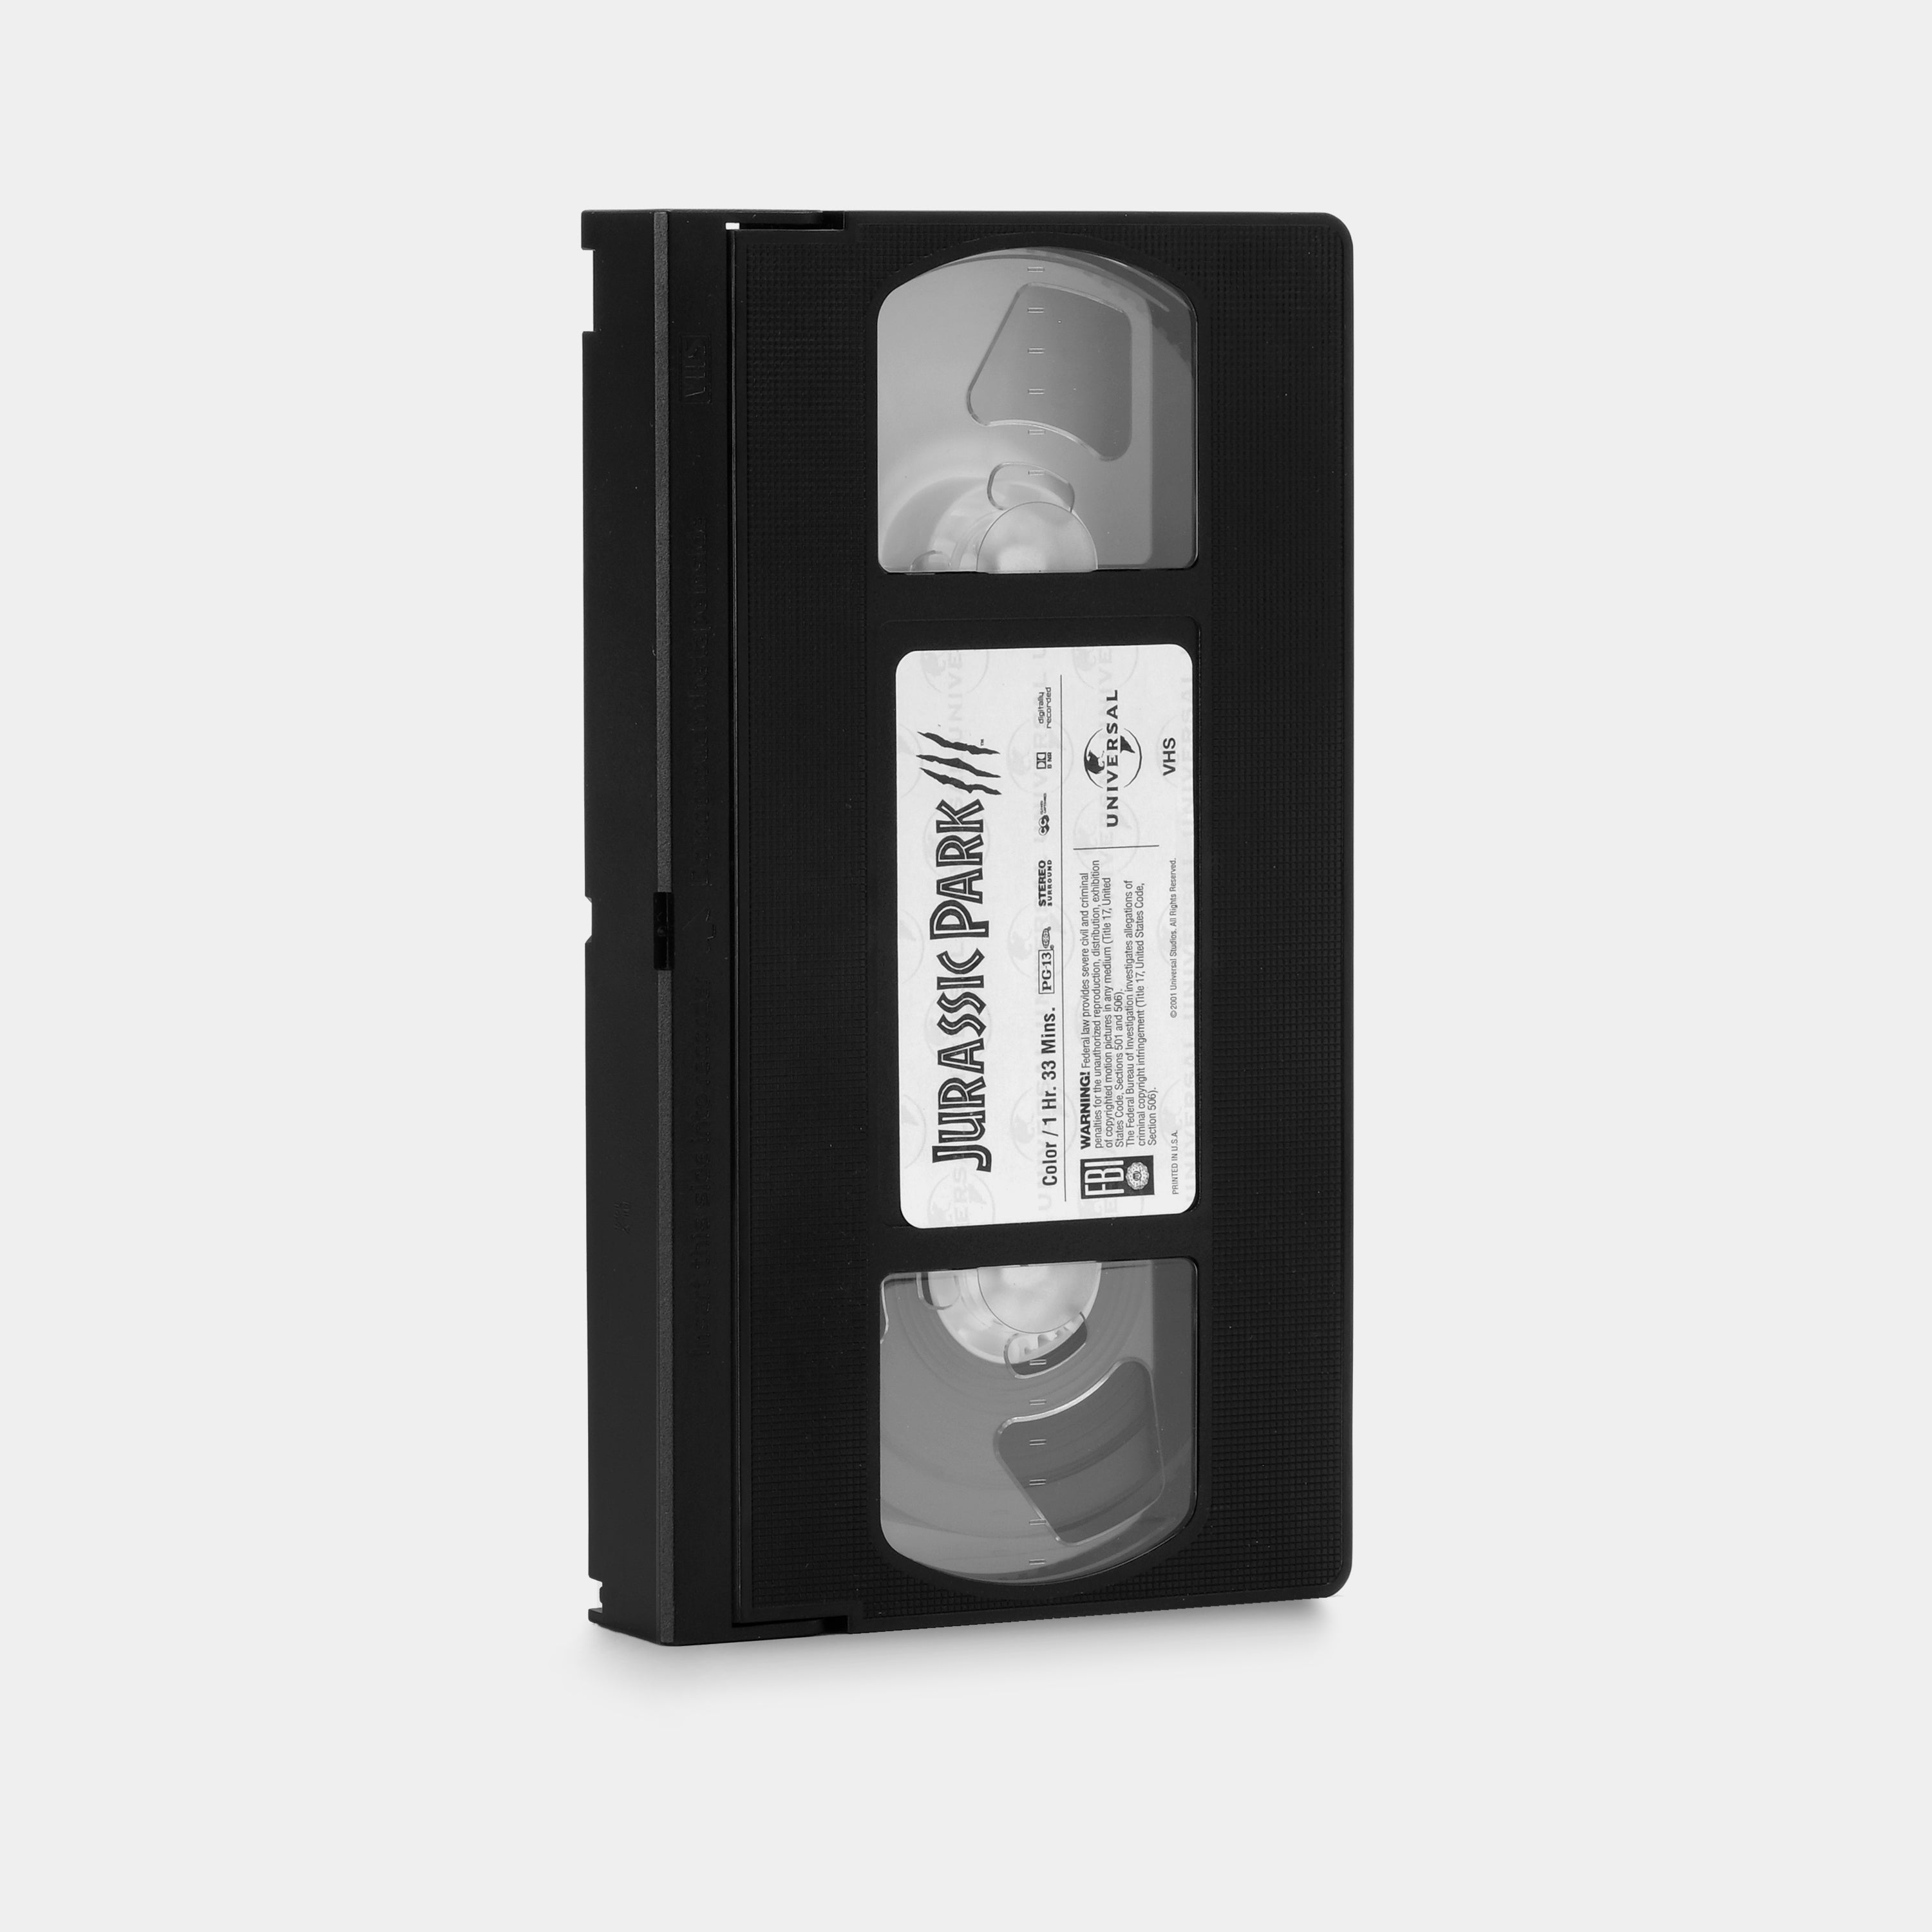 Jurassic Park III VHS Tape